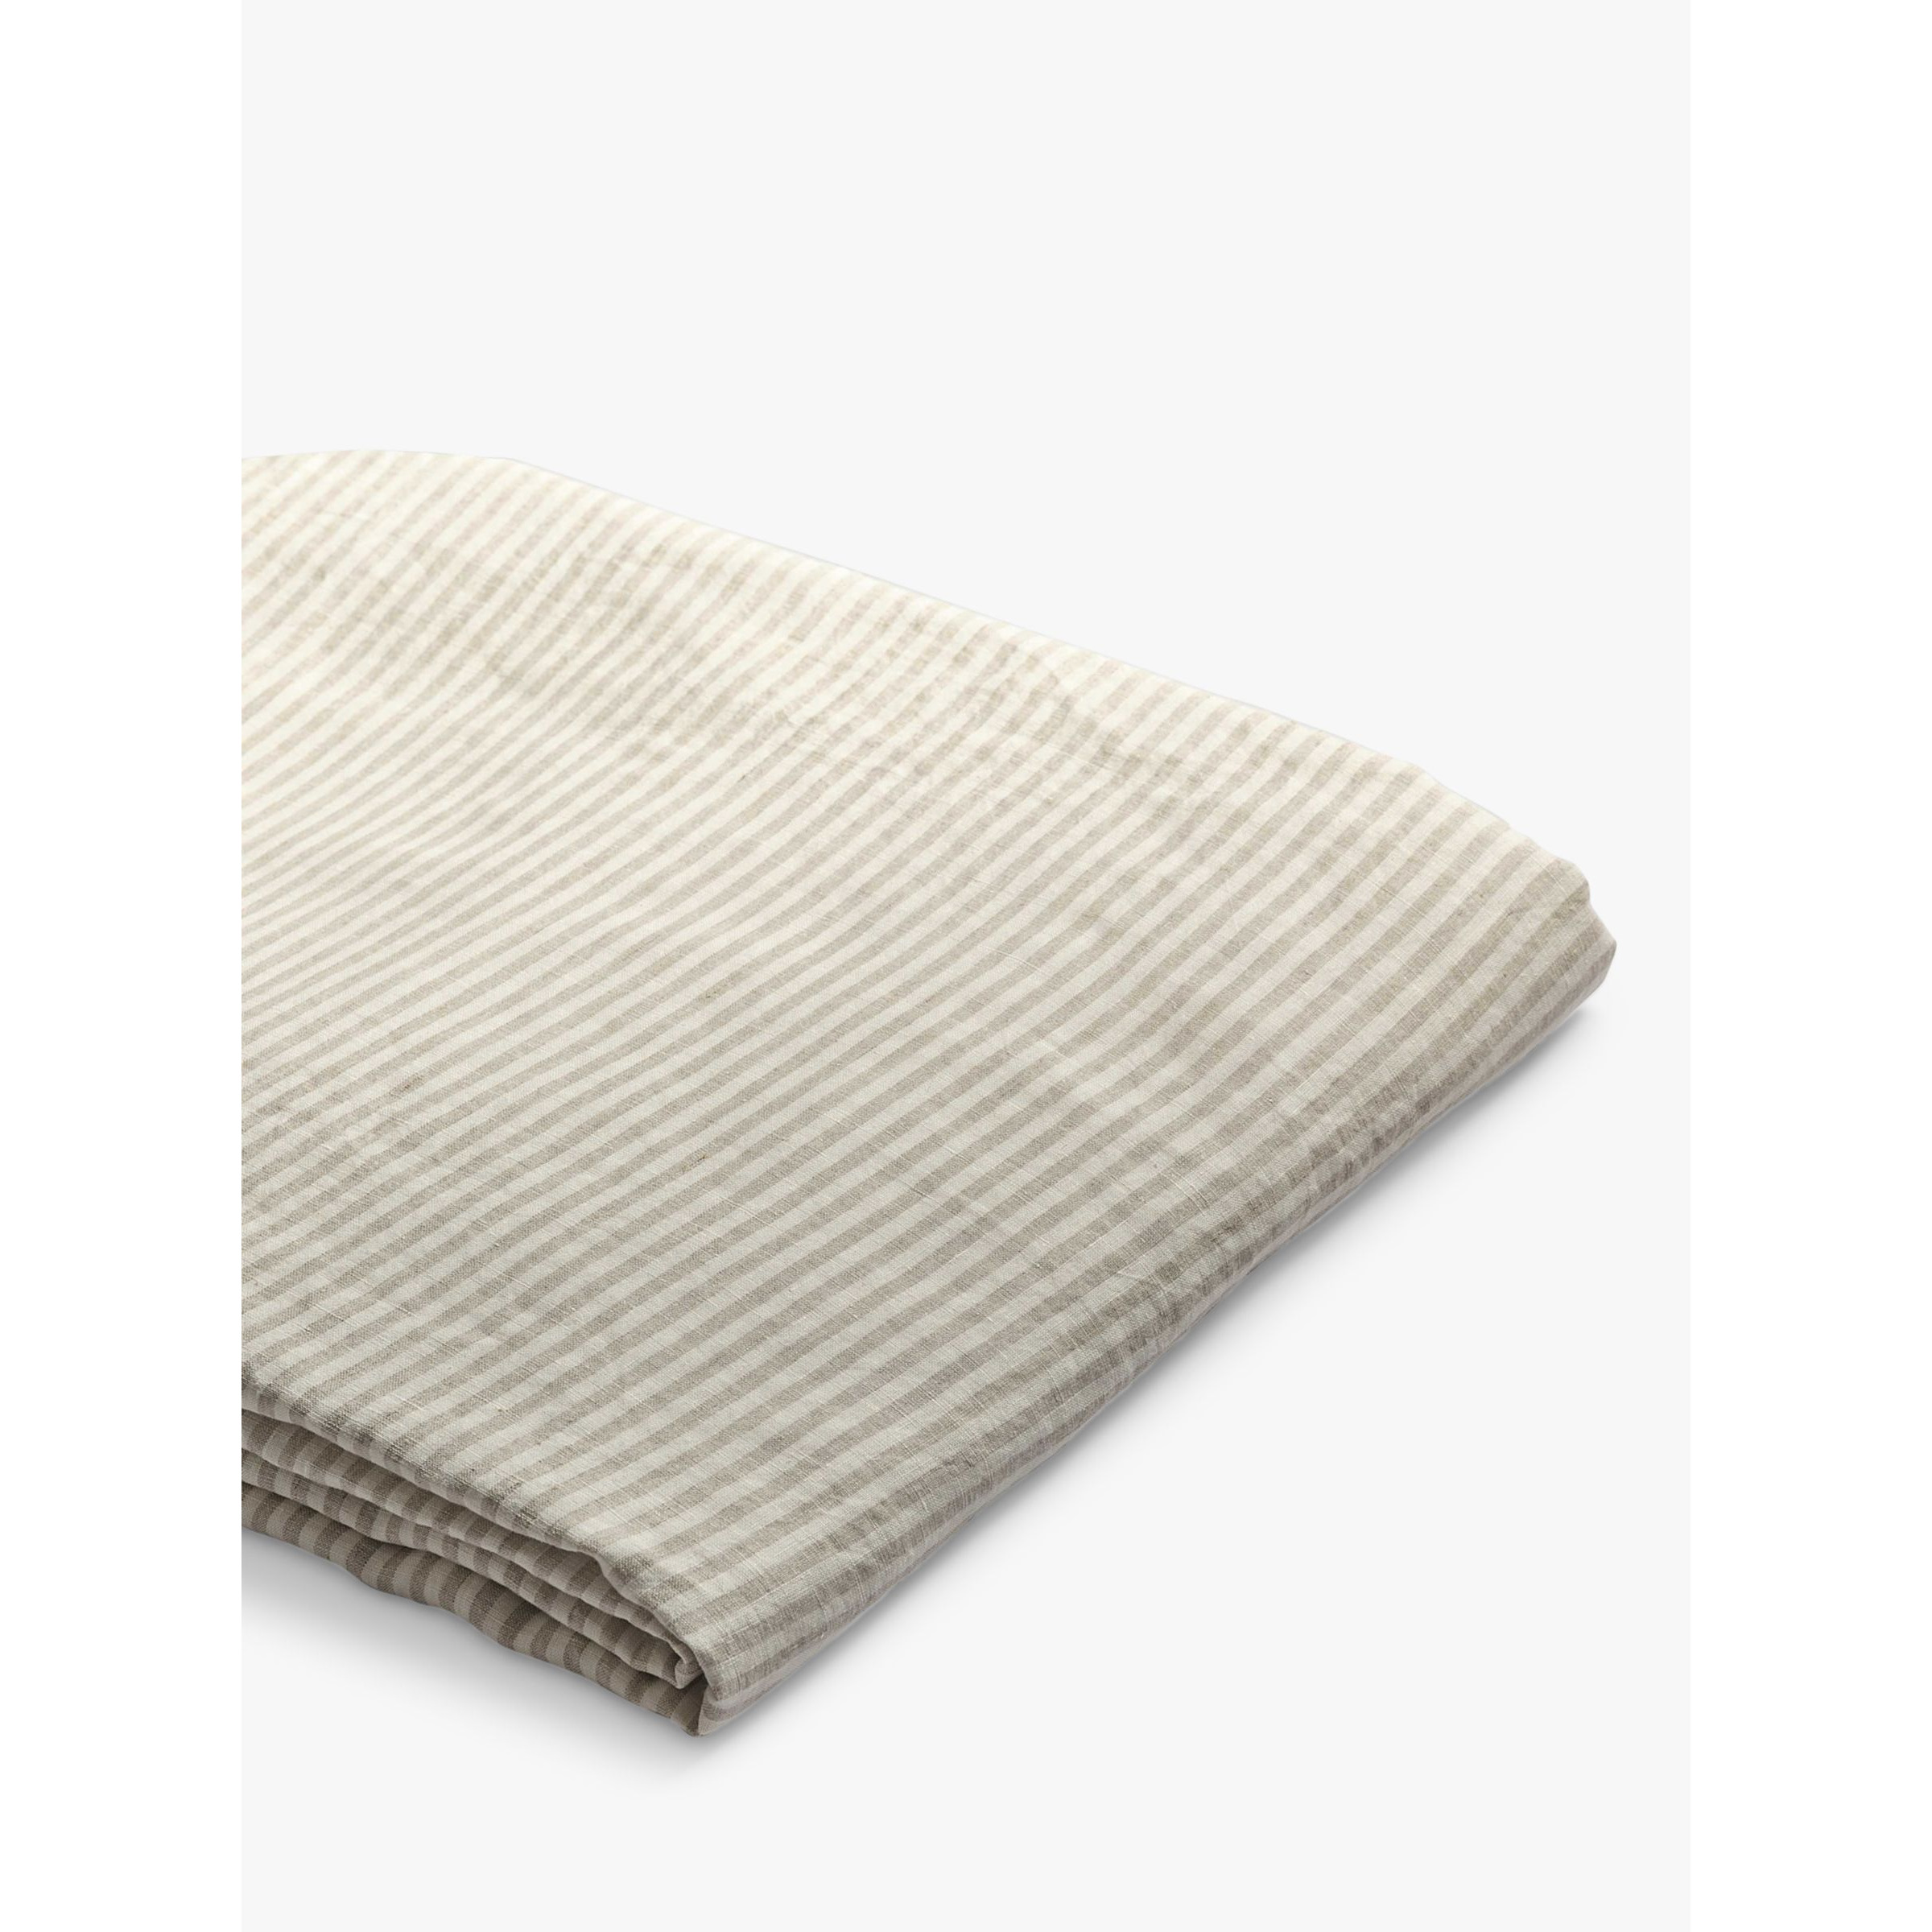 Piglet in Bed Stripe Linen Flat Sheet - image 1